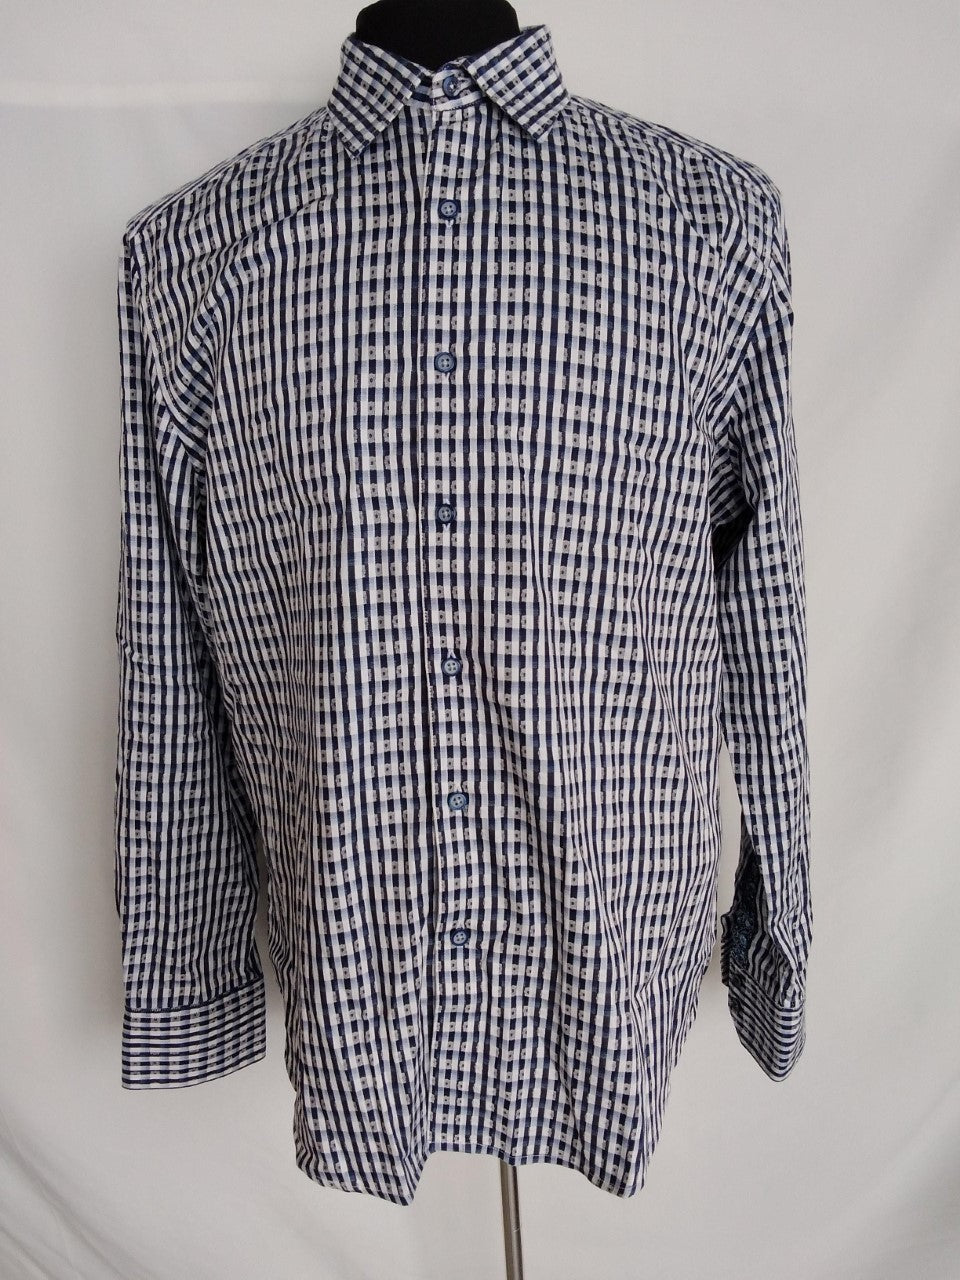 Robert Graham Blue White Check Print Long Sleeve Button Up Shirt - L